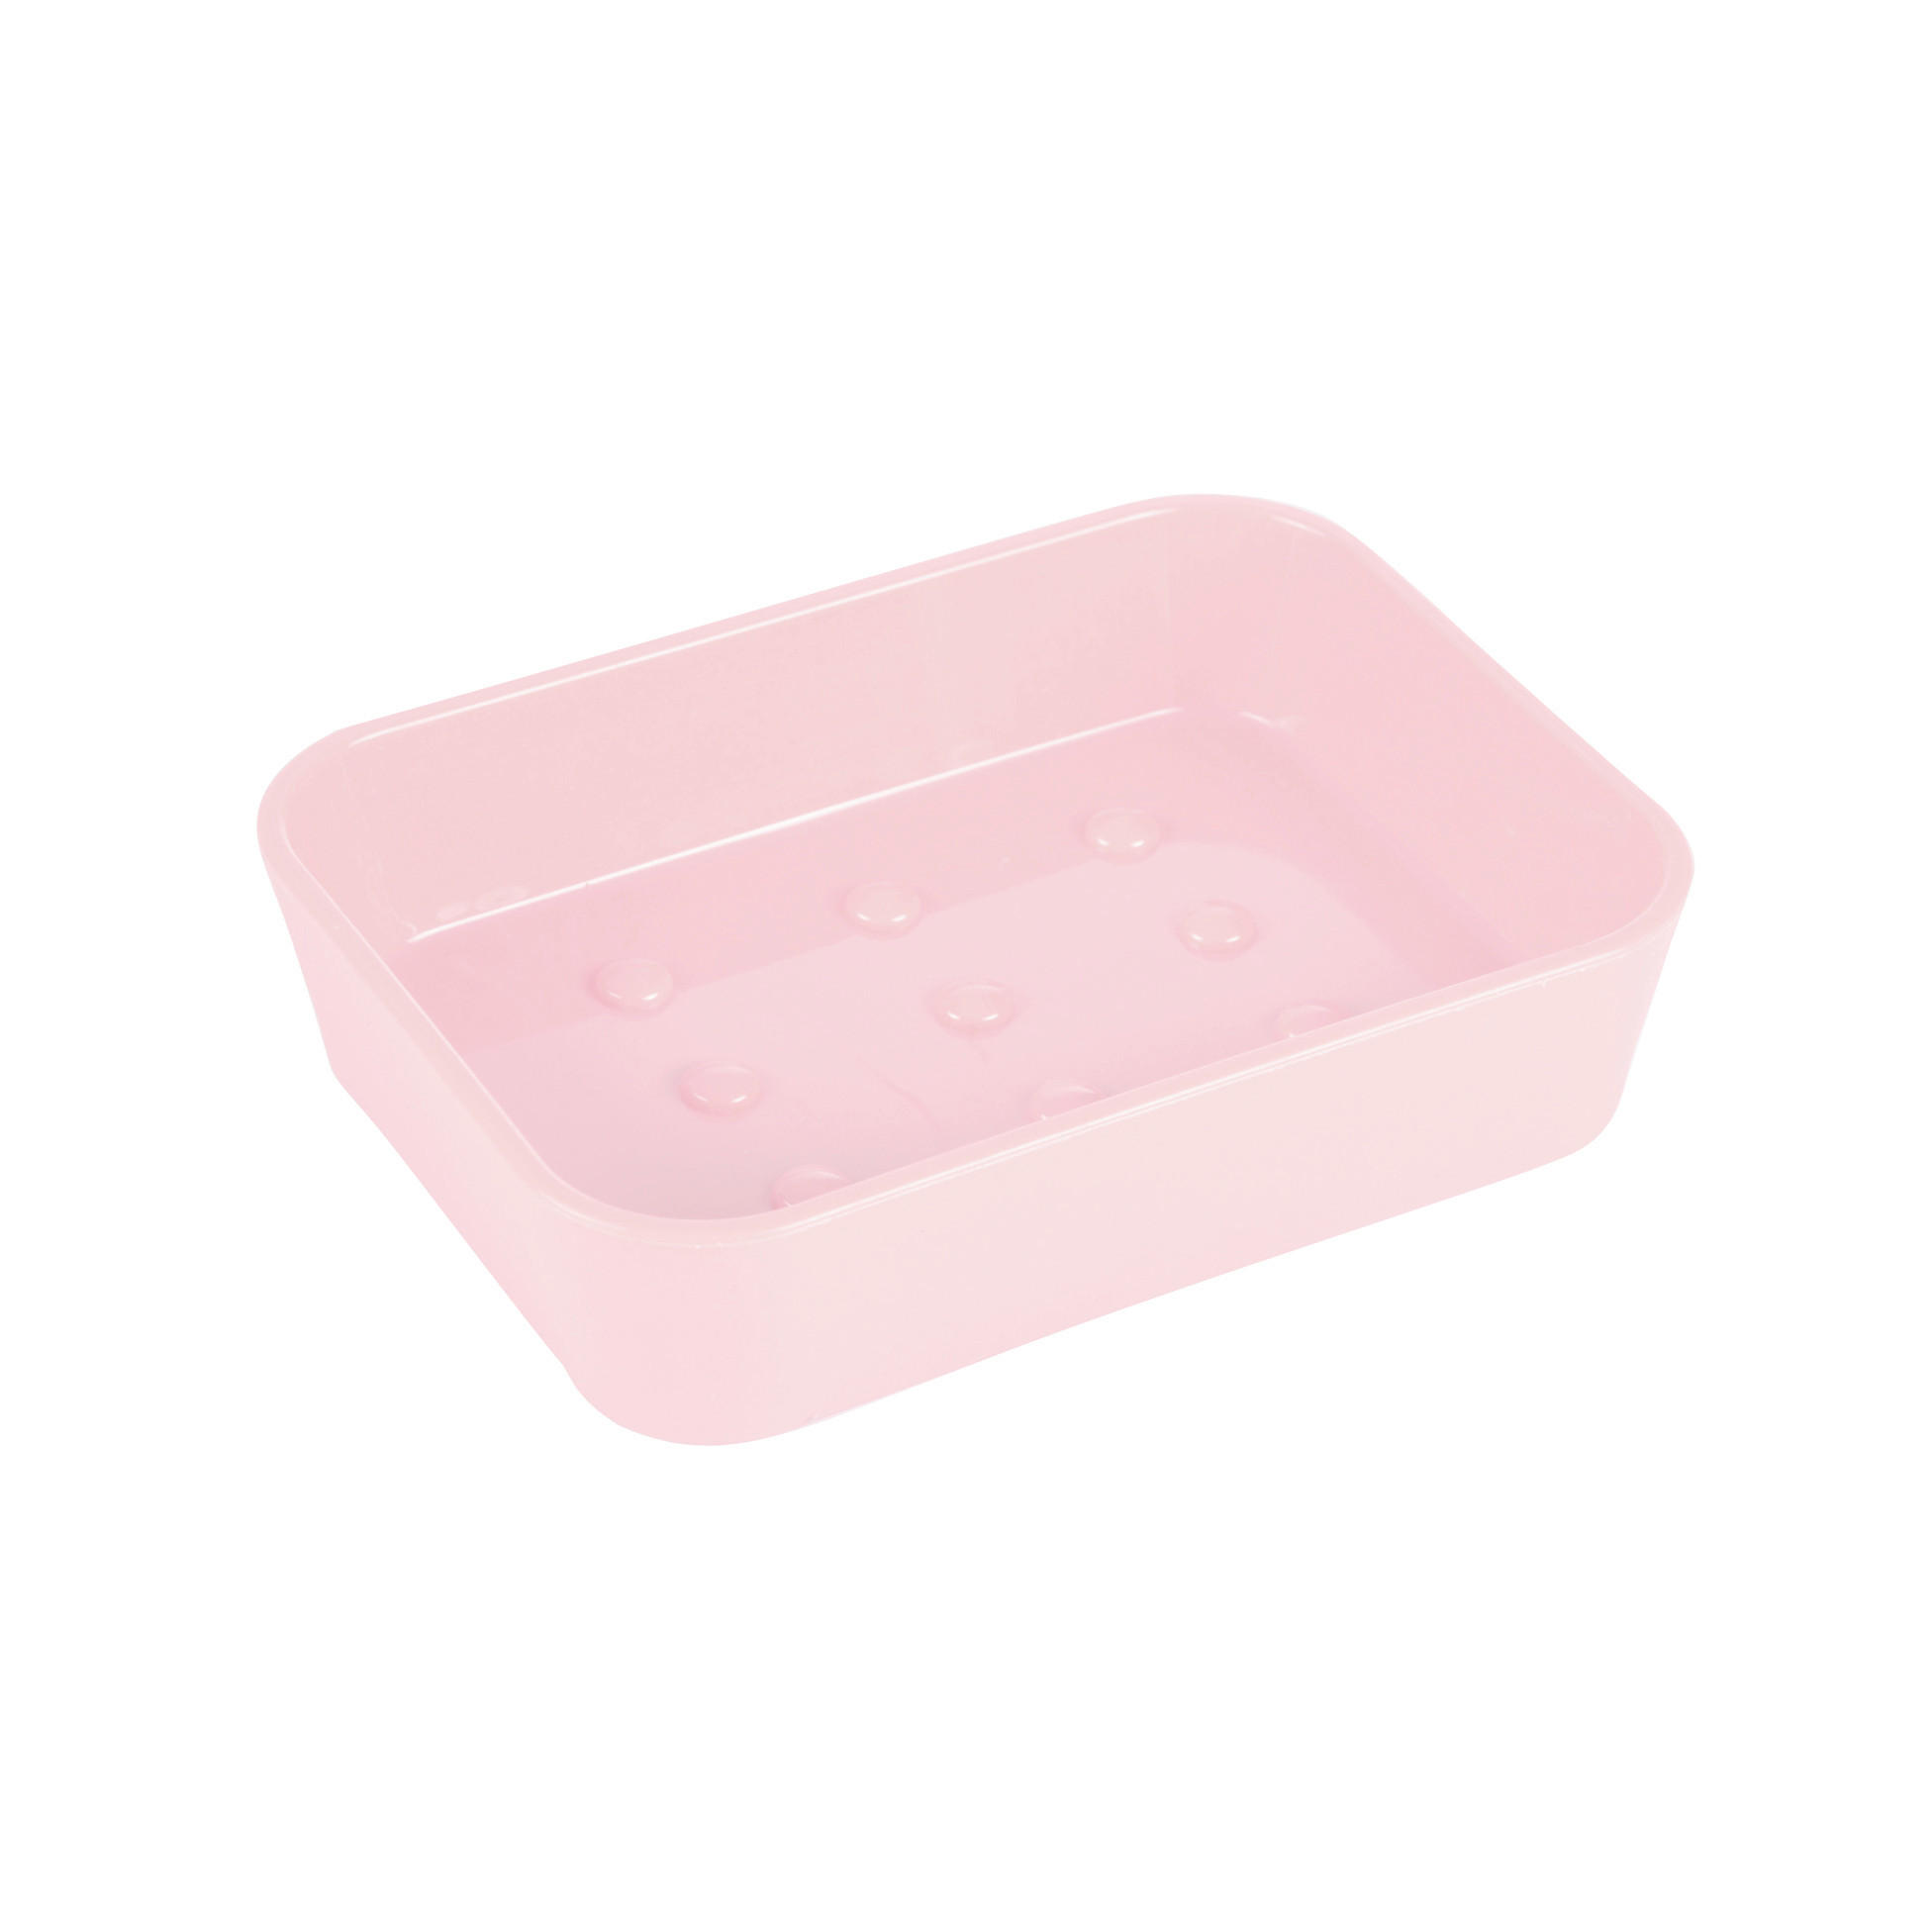 POSUDA ZA SAPUN  ružičasta  plastika  - ružičasta, Osnovno, plastika (11,9/2,3/8,9cm)